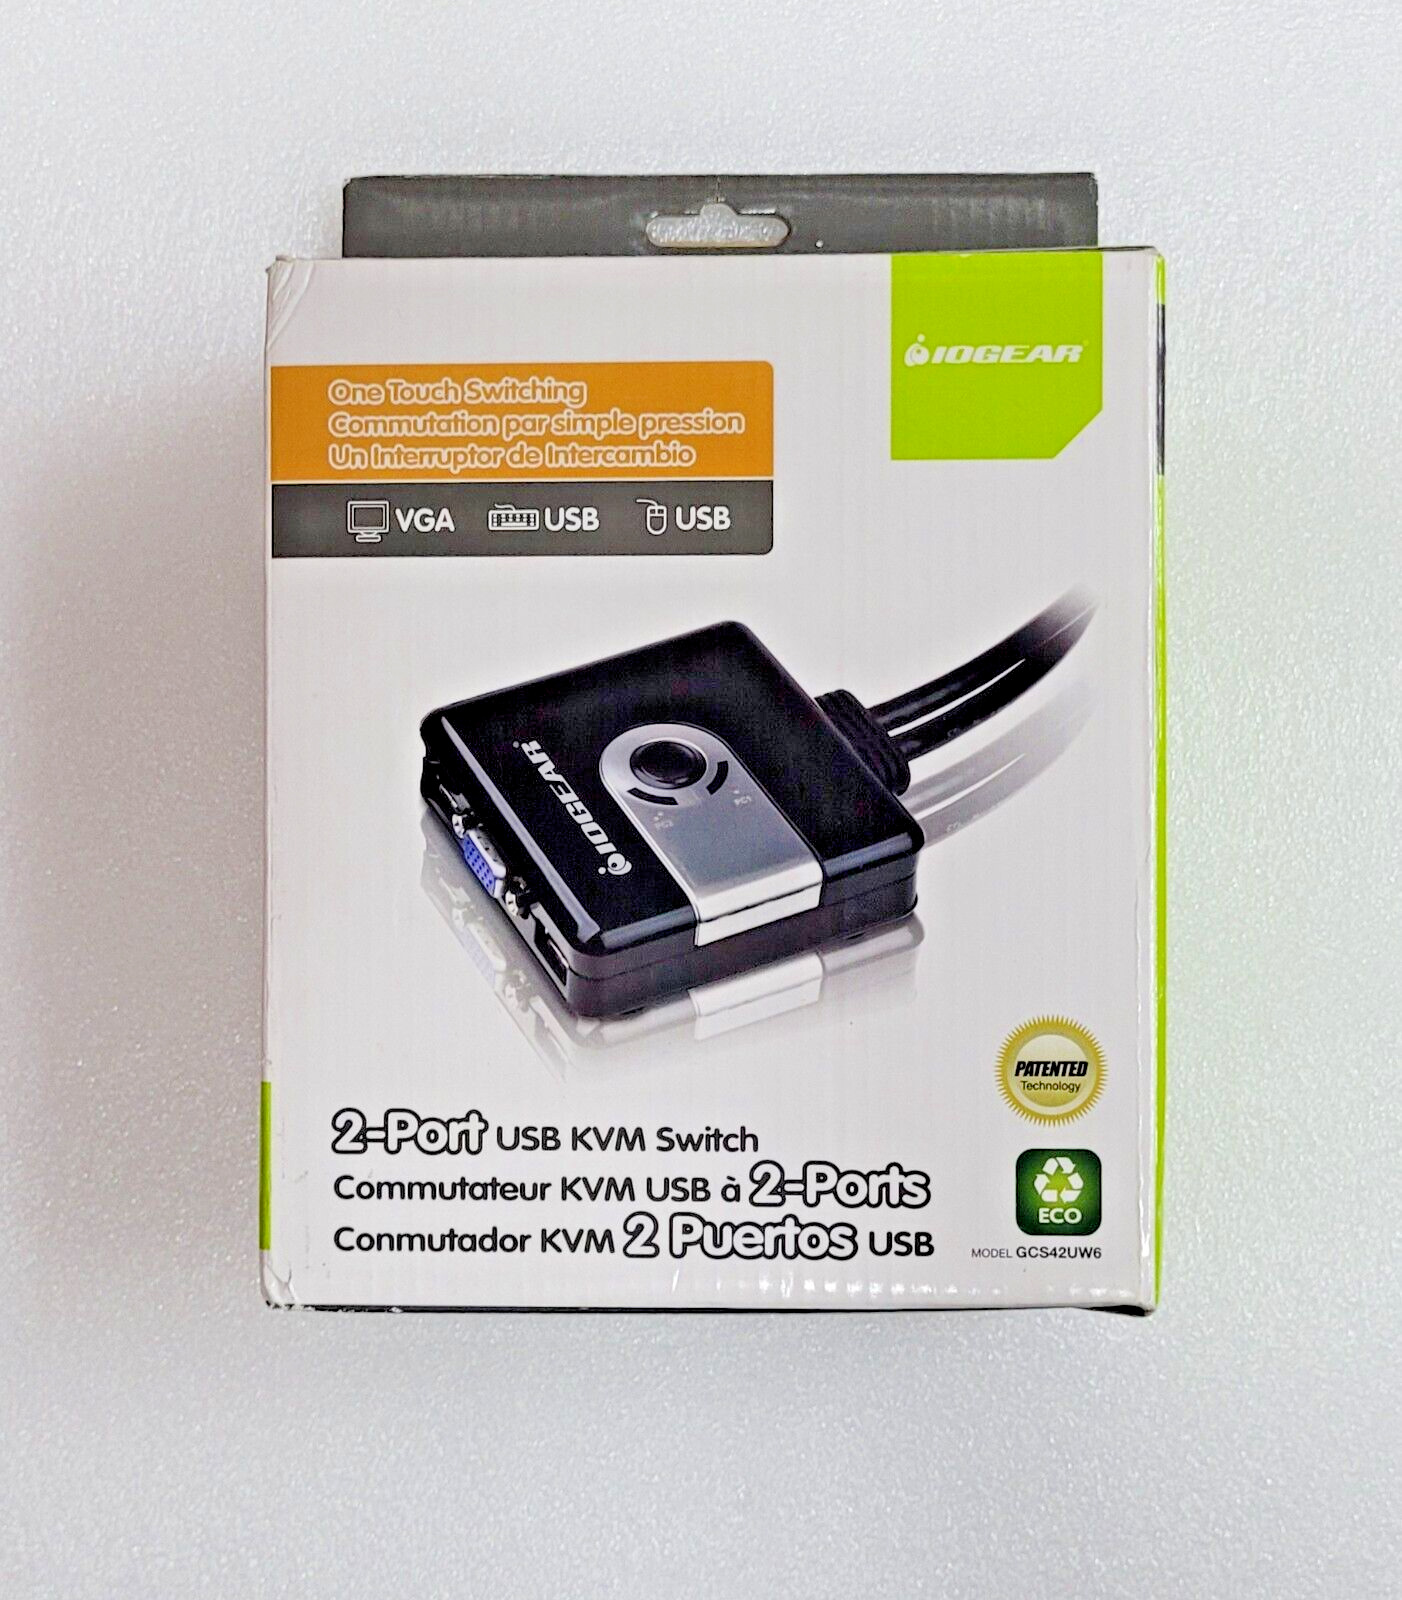 IOGEAR GCS42UW6 KVM Switch 2-PORT USB VGA CABLE KVM SWITCH